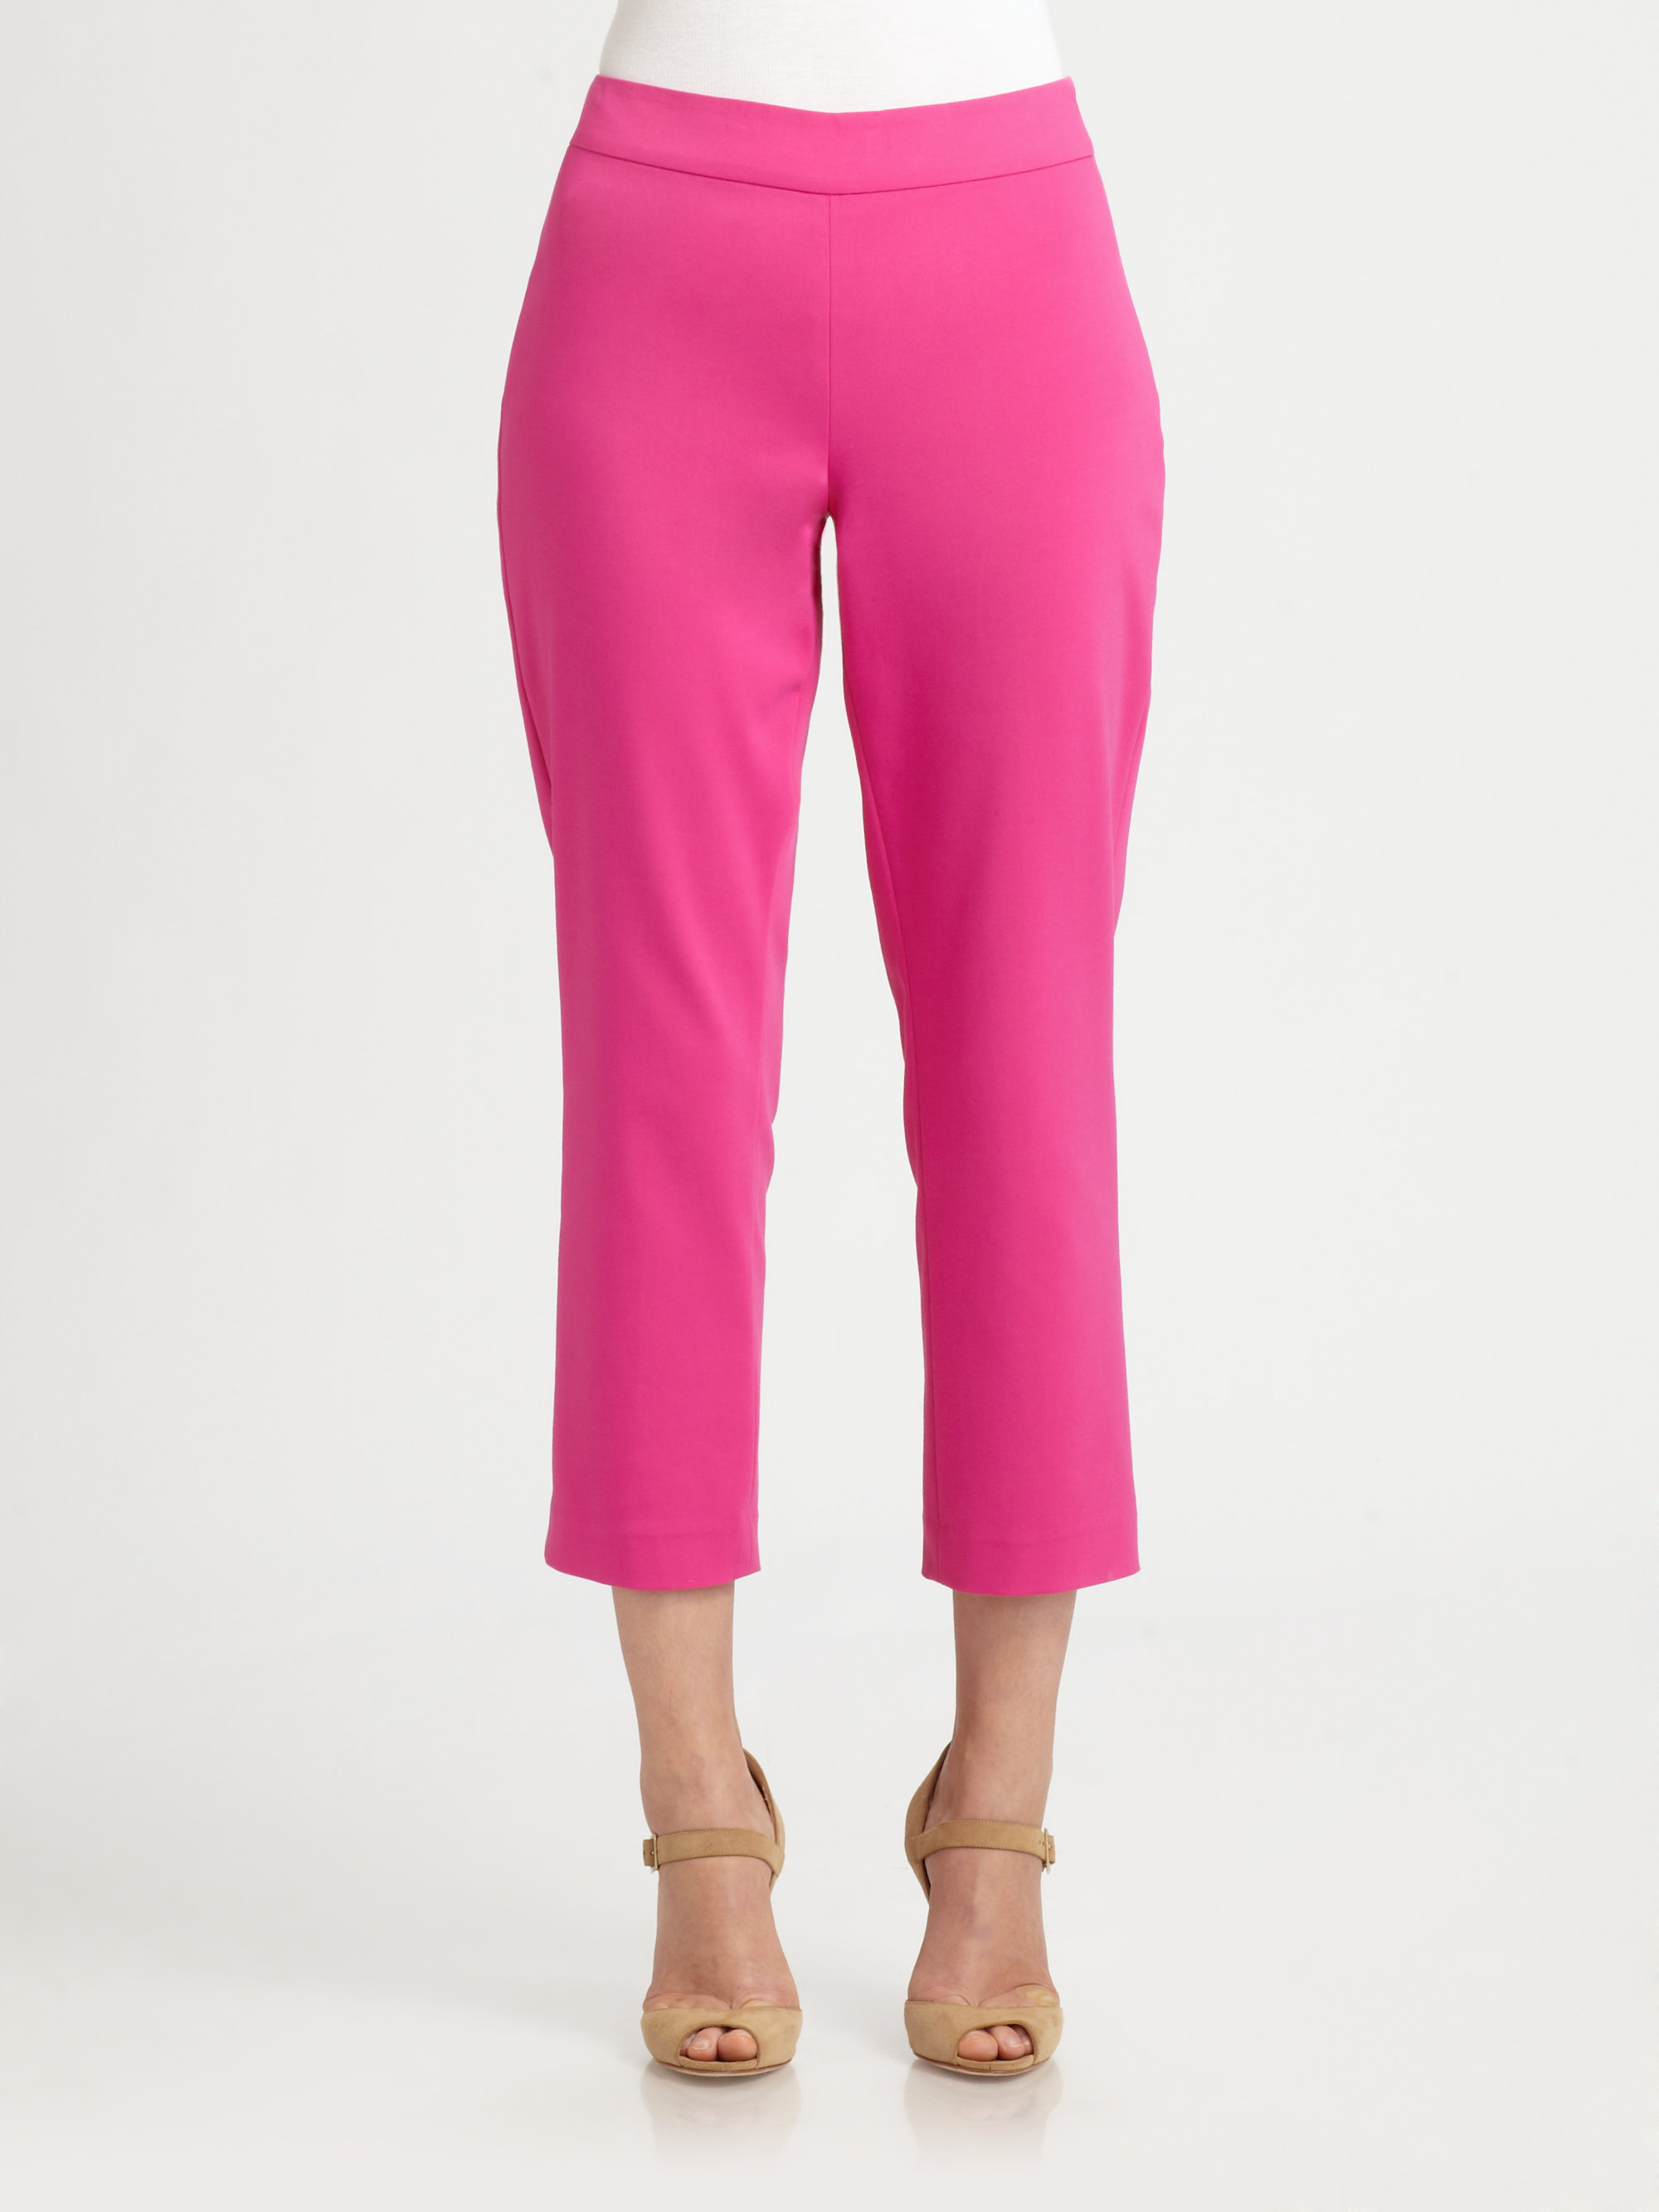 Josie Natori Cropped Pants in Pink - Lyst